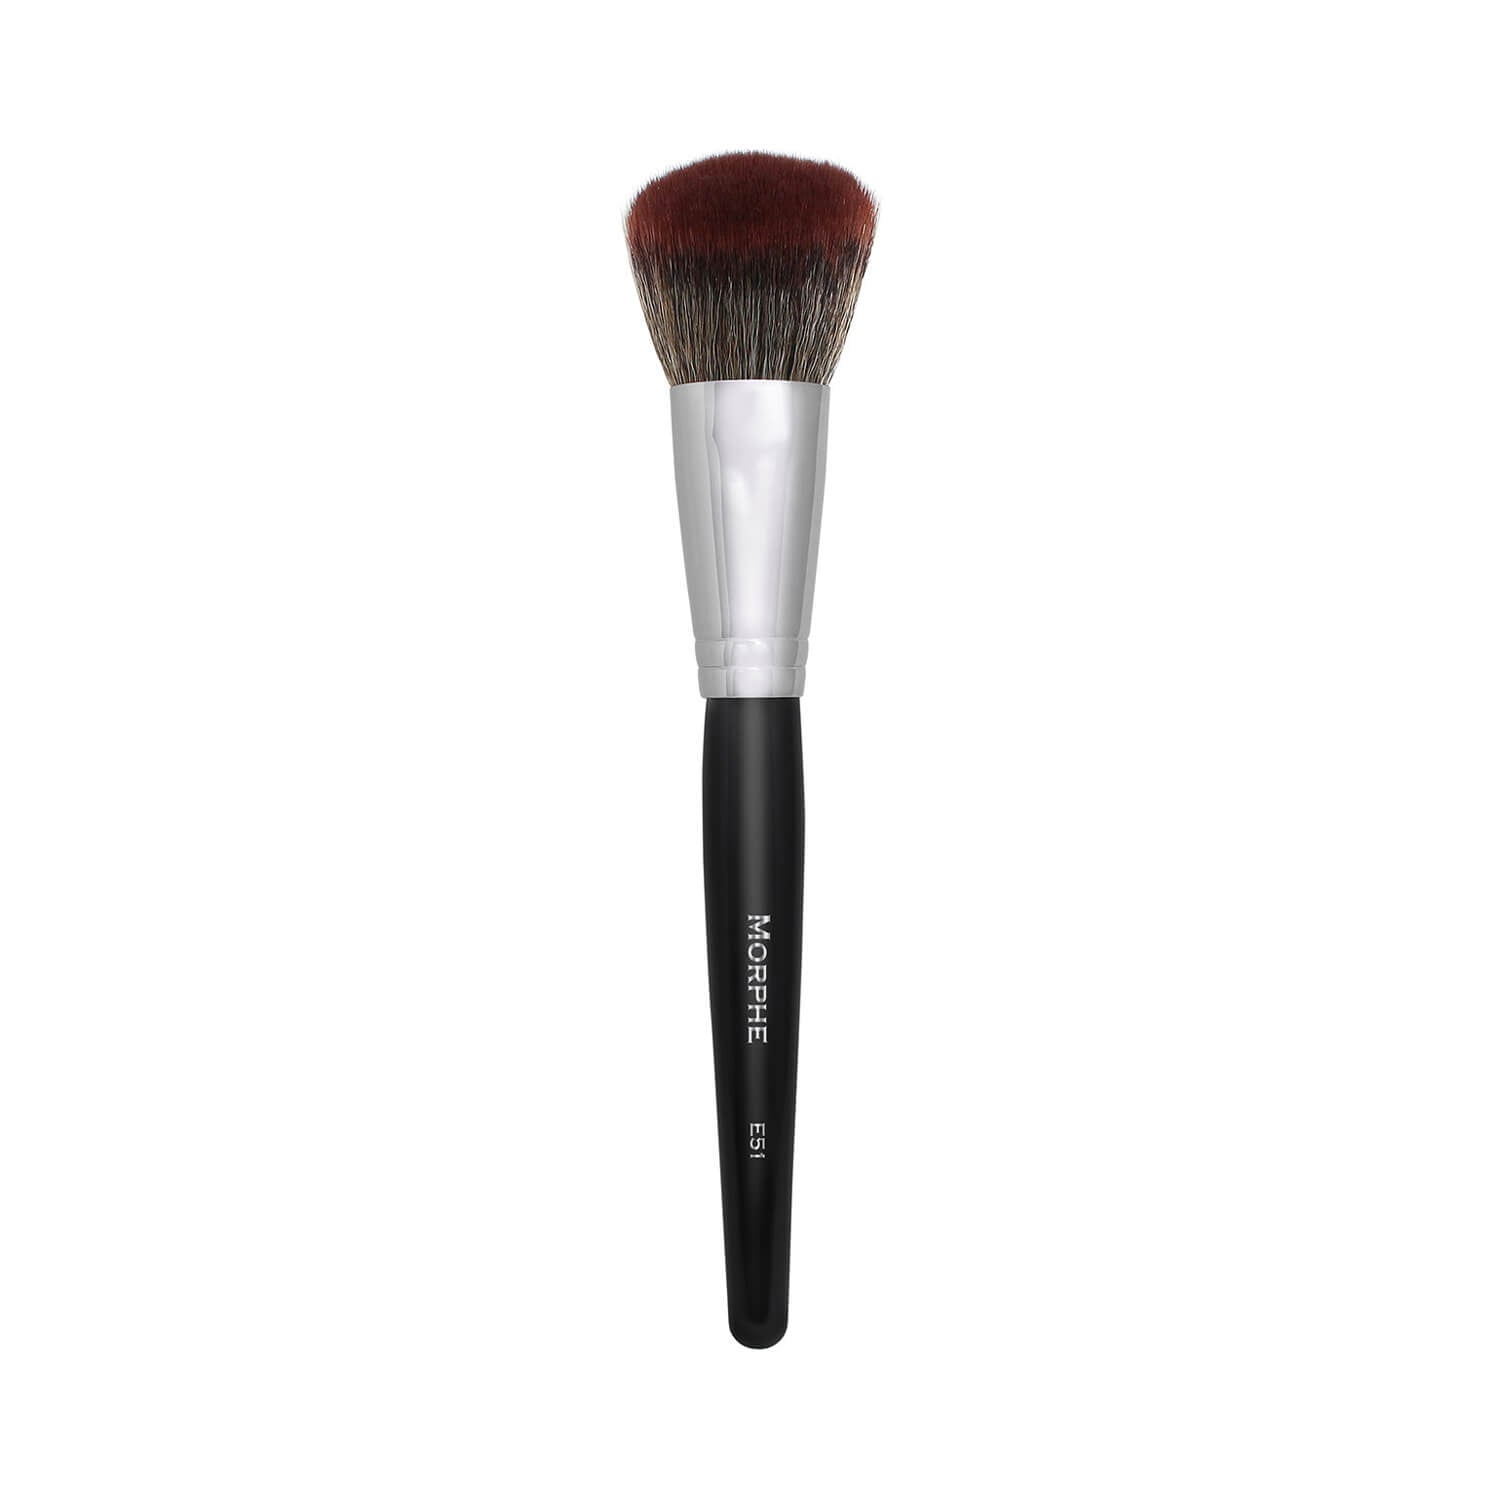 Morphe Cosmetics E51 Deluxe Angled Powder Contour Brush